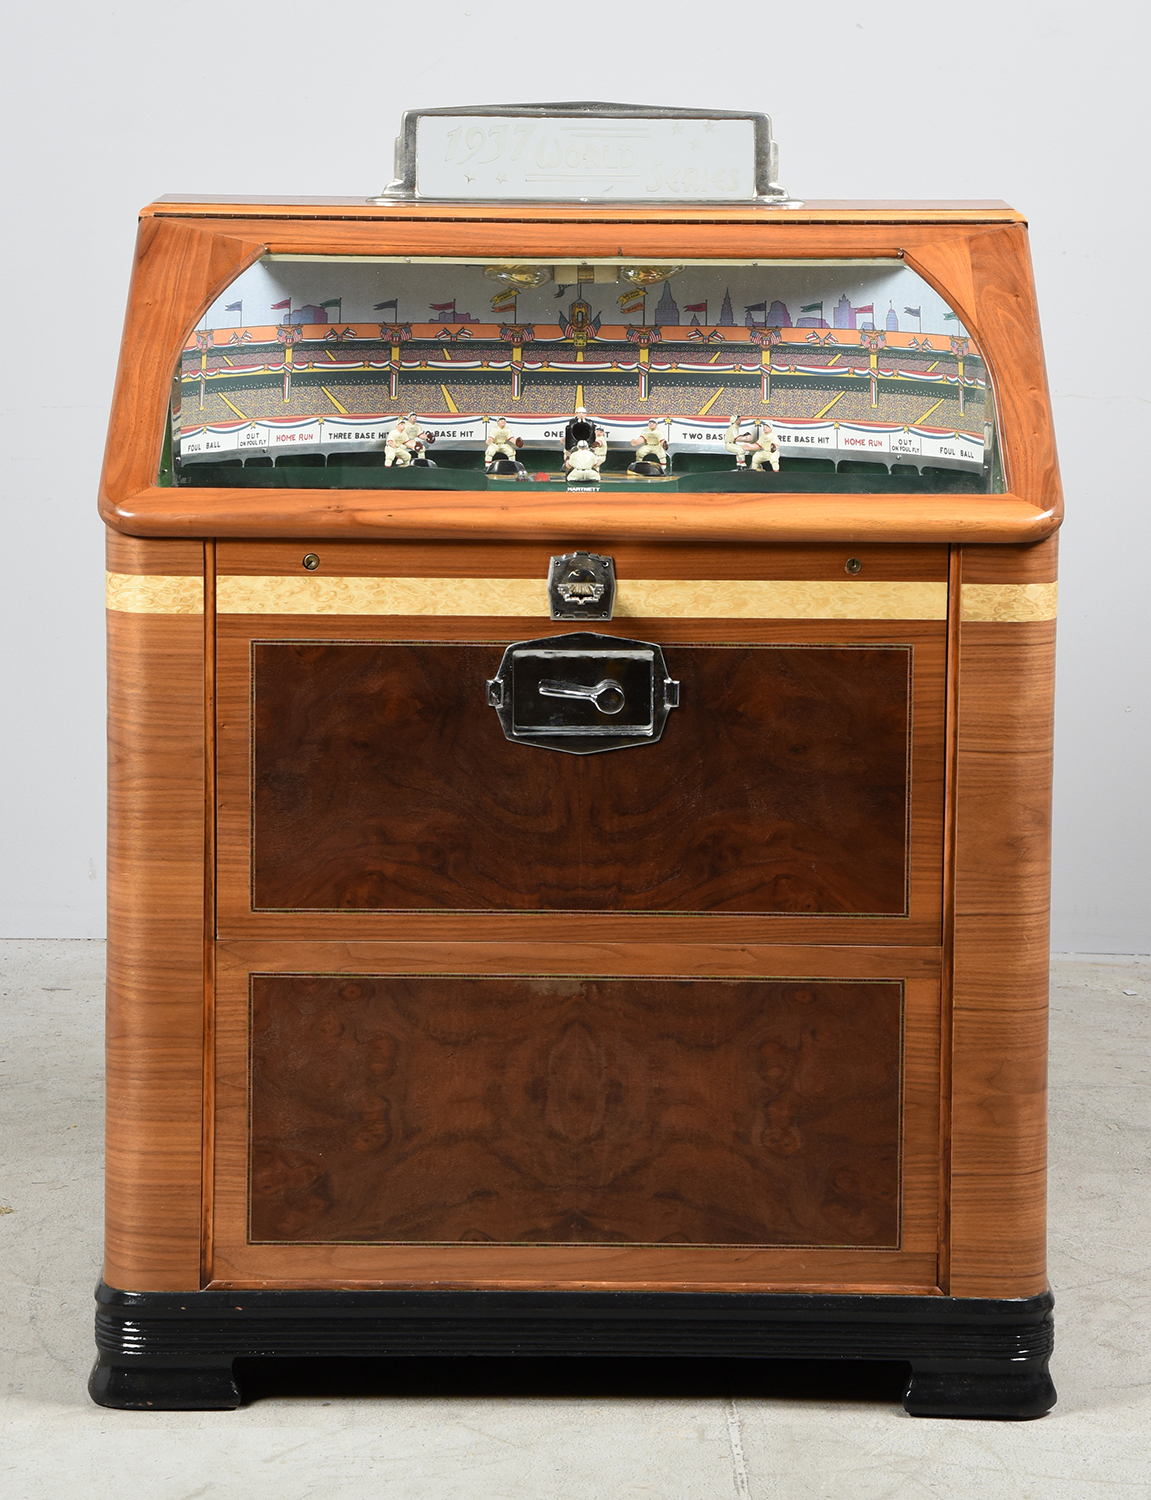 5¢ Rock-Ola 1937 World Series Pinball Machine, Estimated at $40,000-60,000.